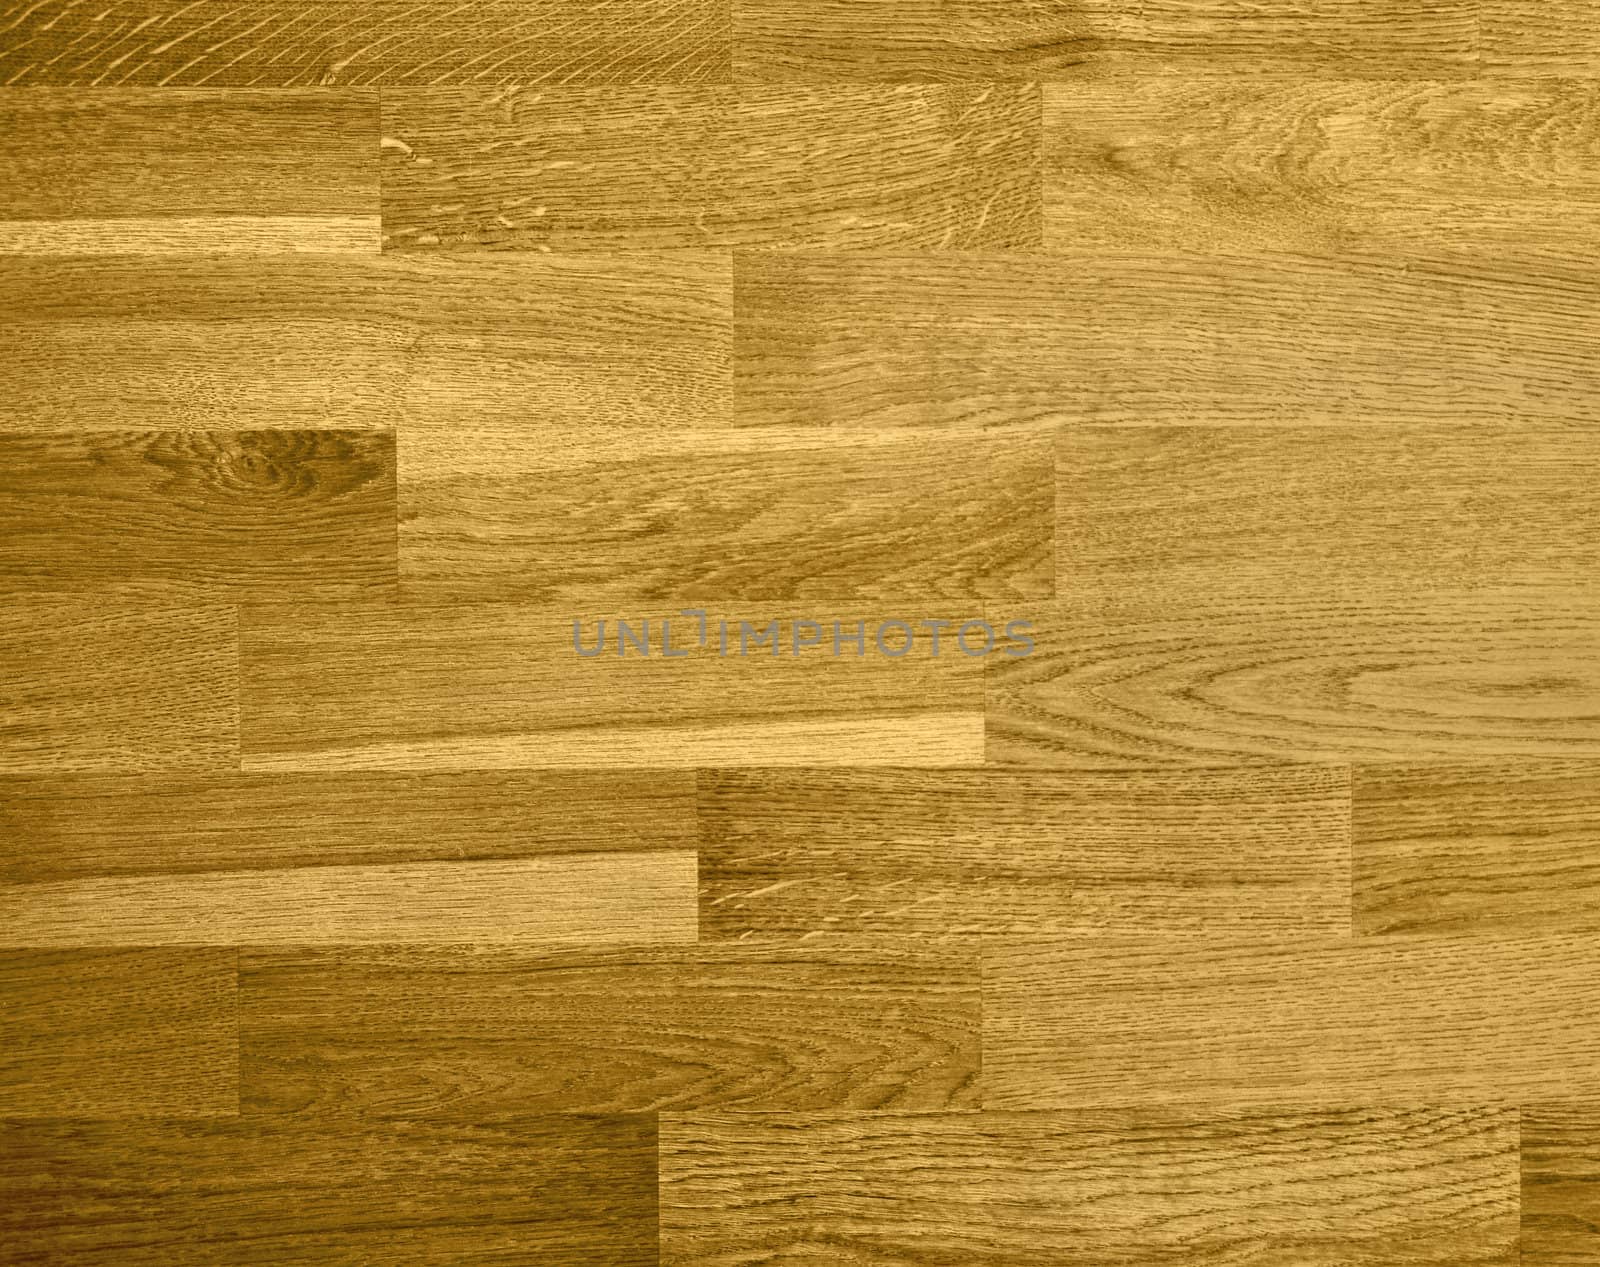 Oak floor photo detail as texture background